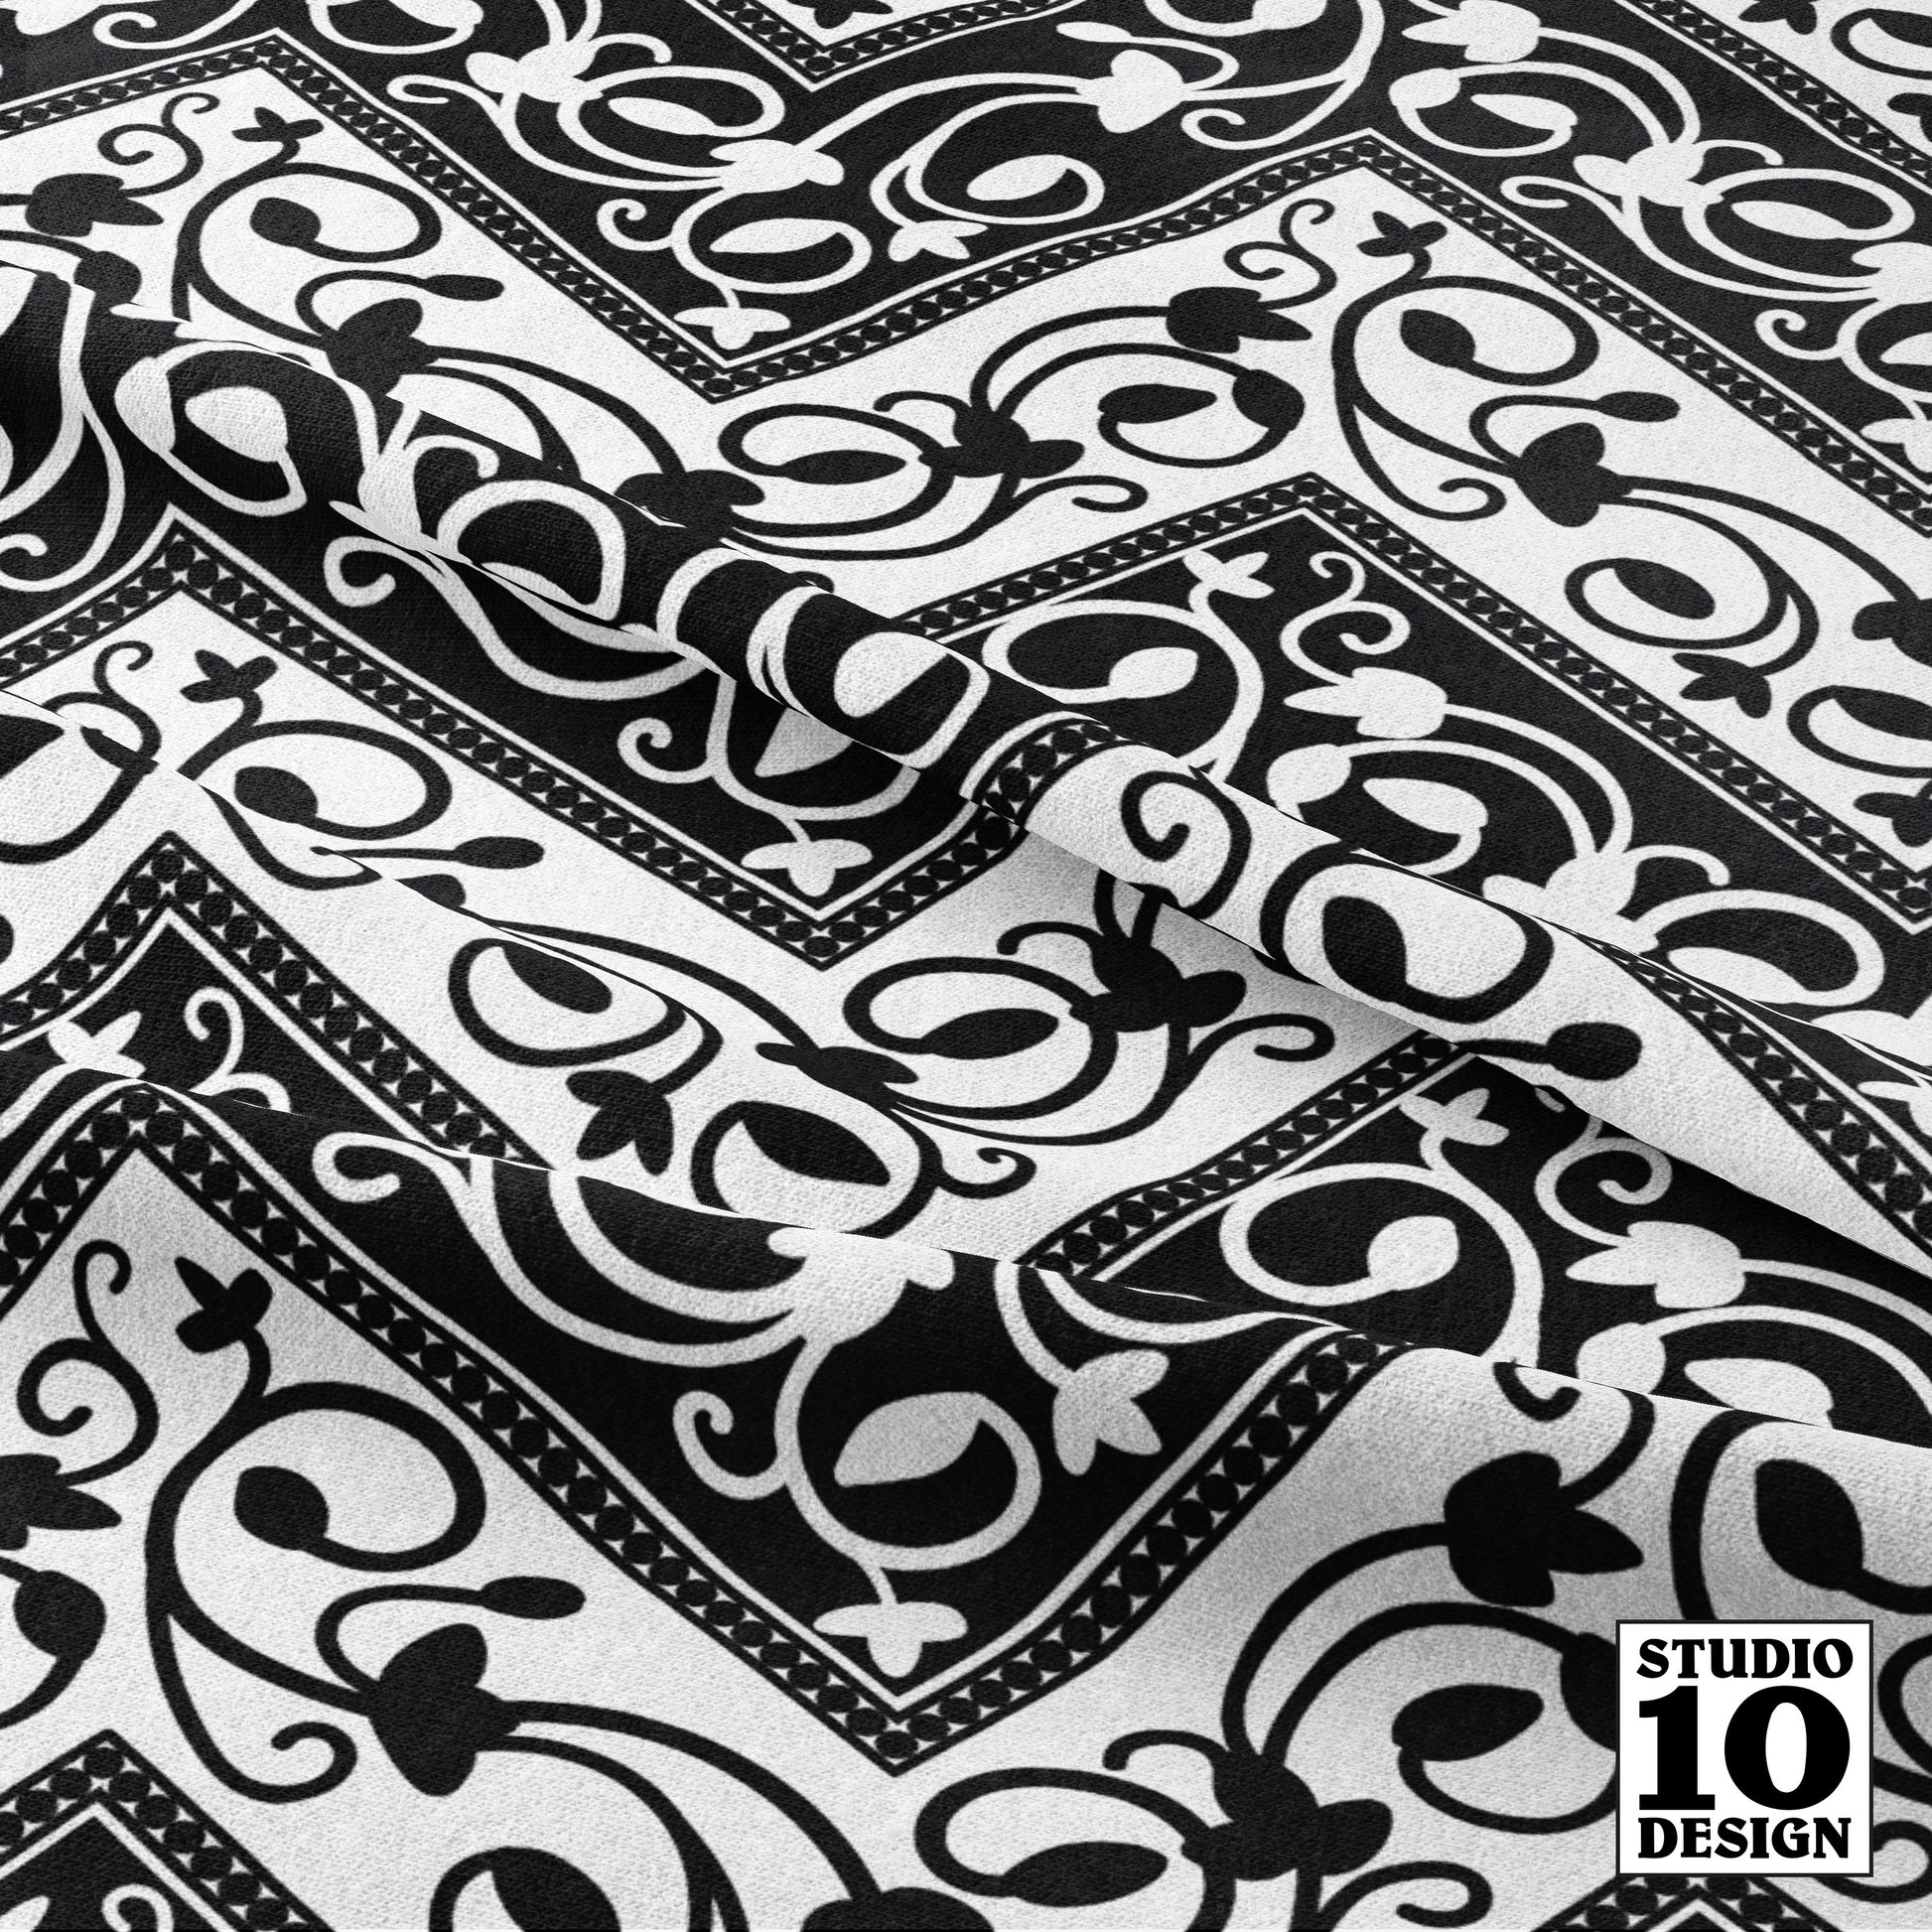 Chevron (Black, White) Printed Fabric by Studio Ten Design